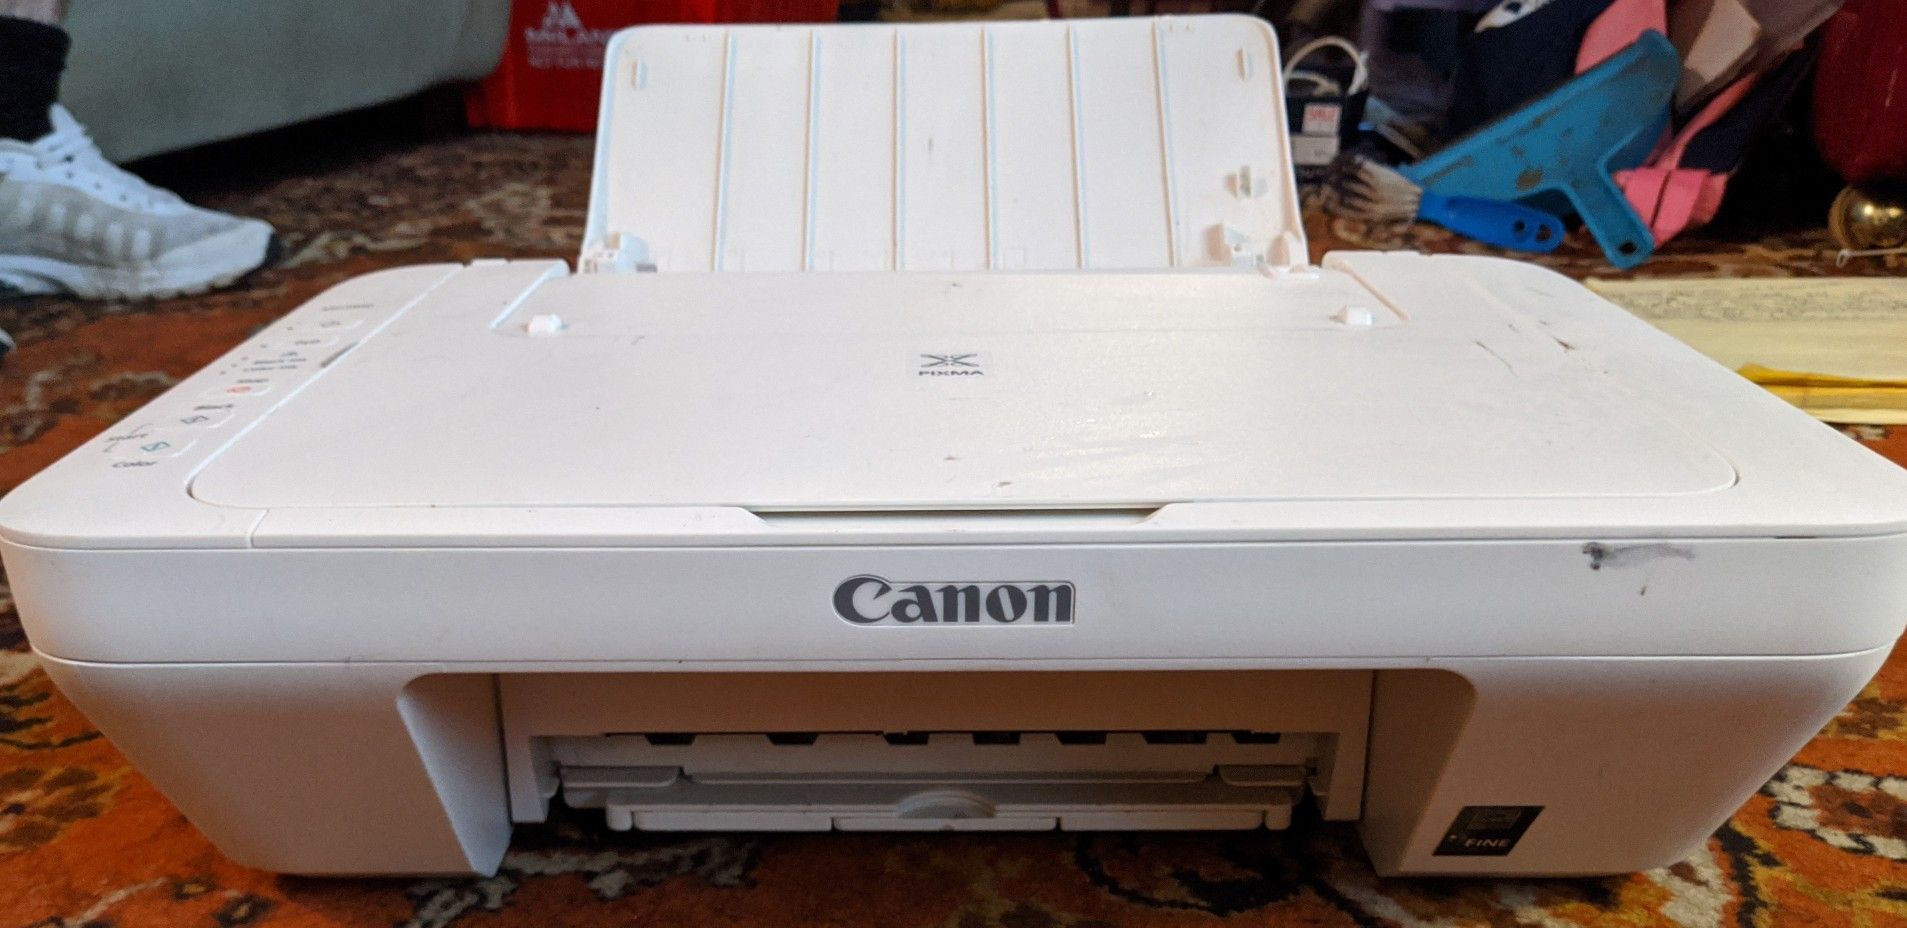 Canon white multifunction printer